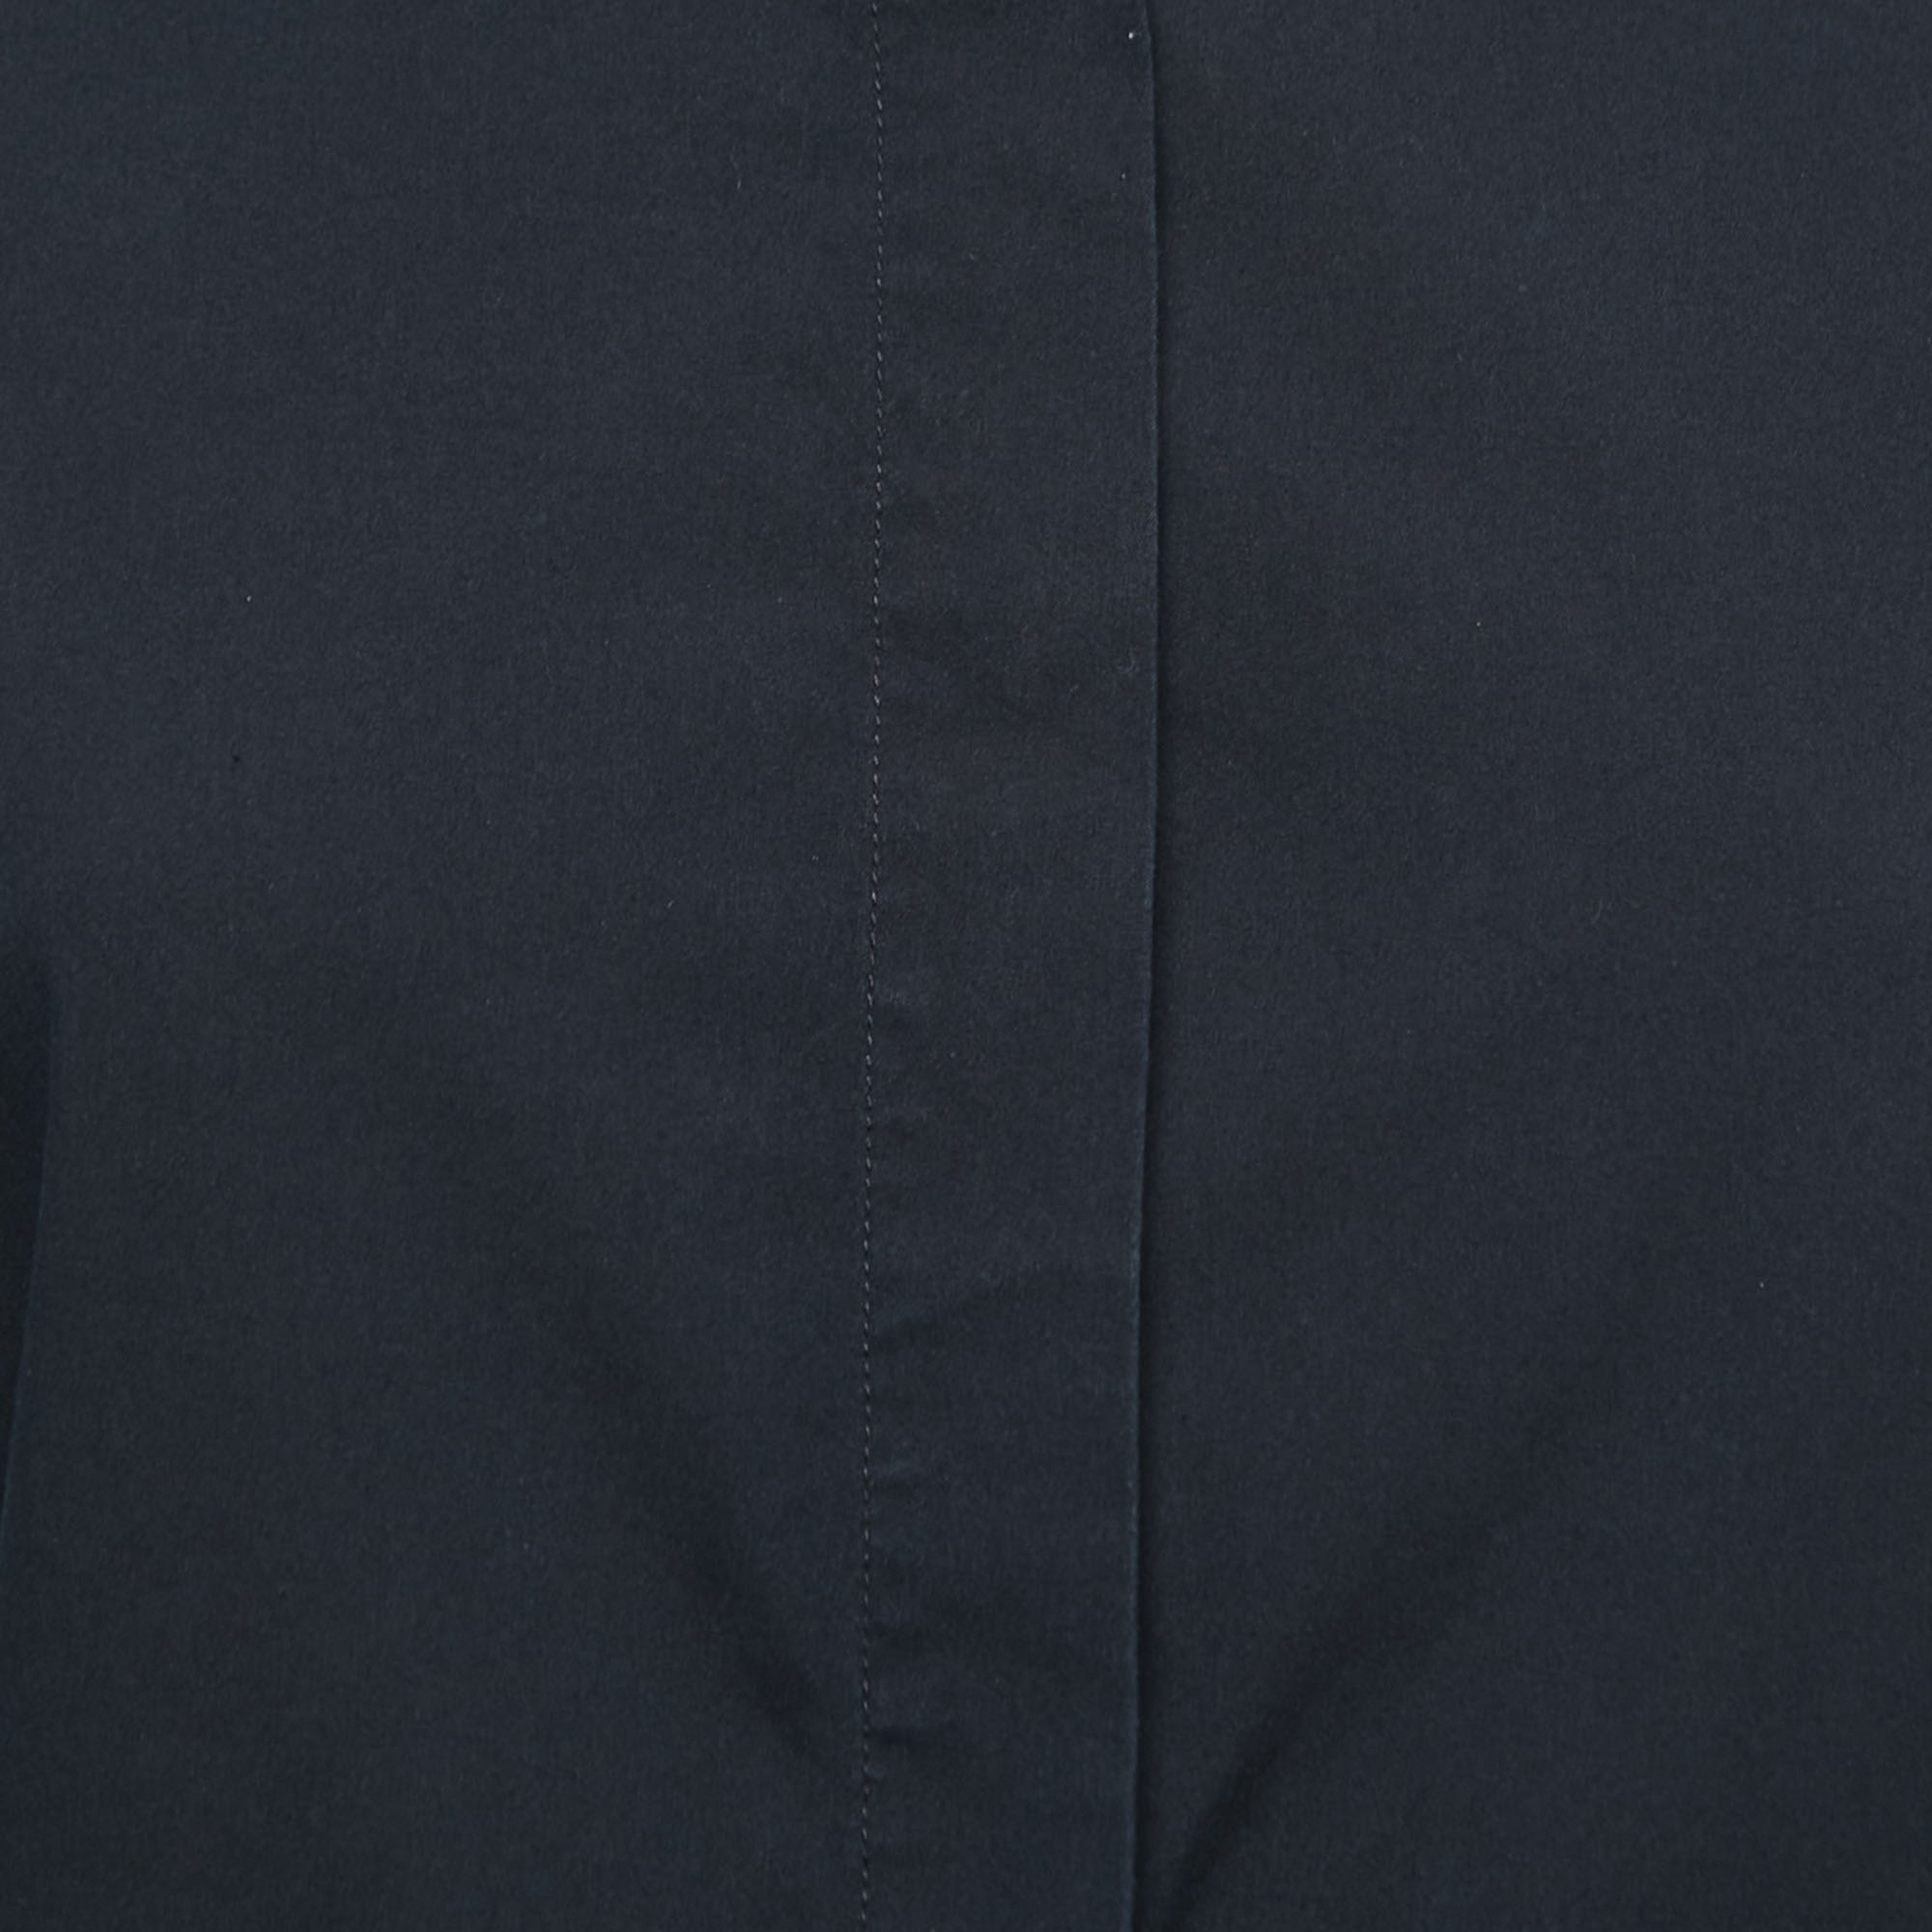 Emporio Armani Midnight Blue Cotton Short Sleeve Shirt L